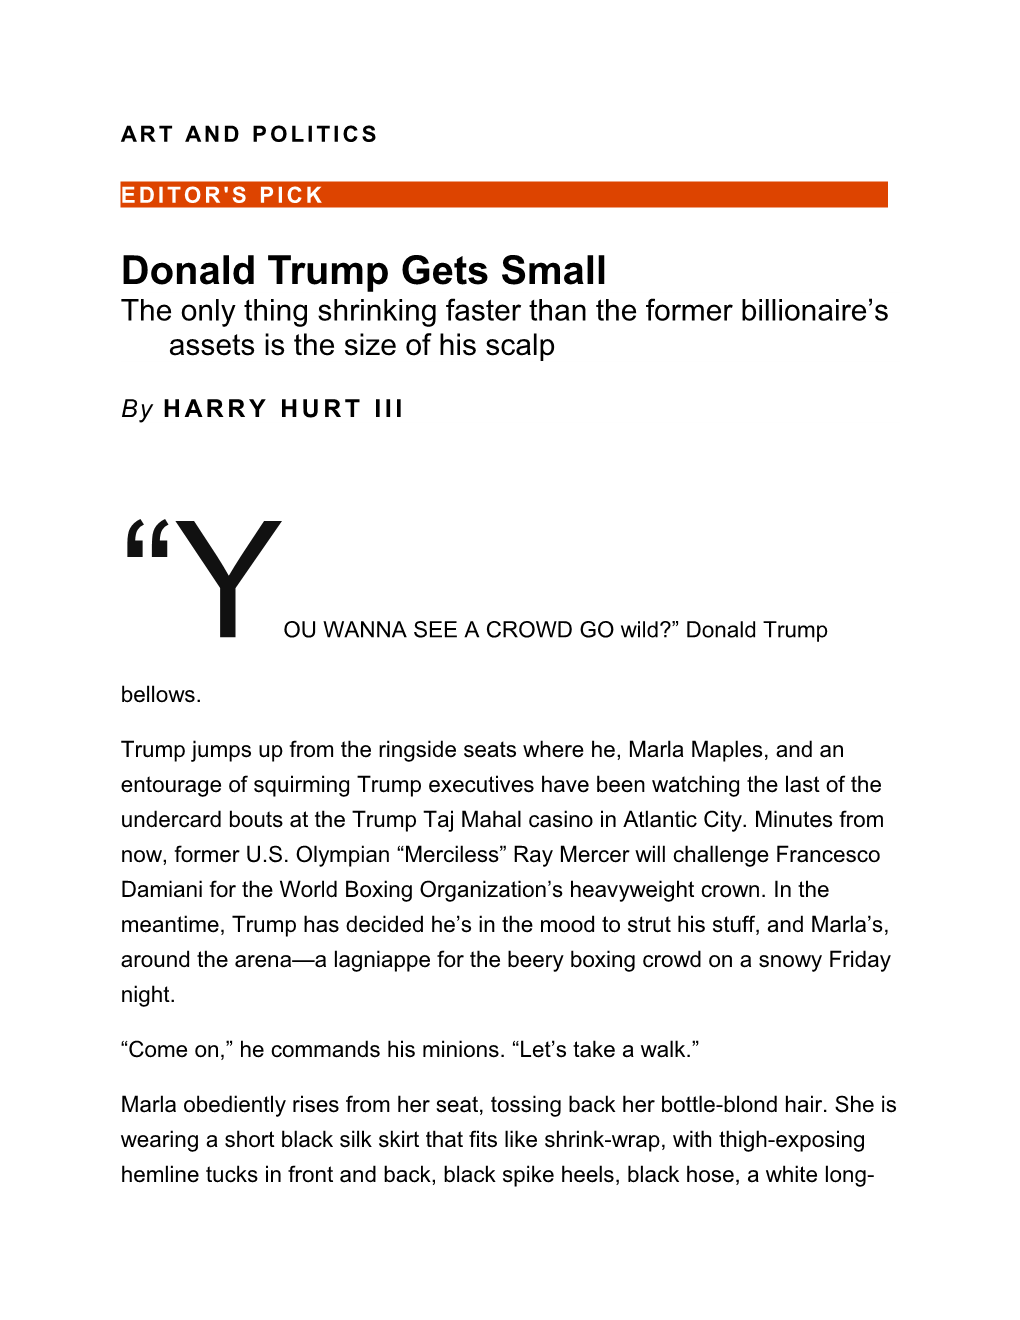 Donald Trump Gets Small